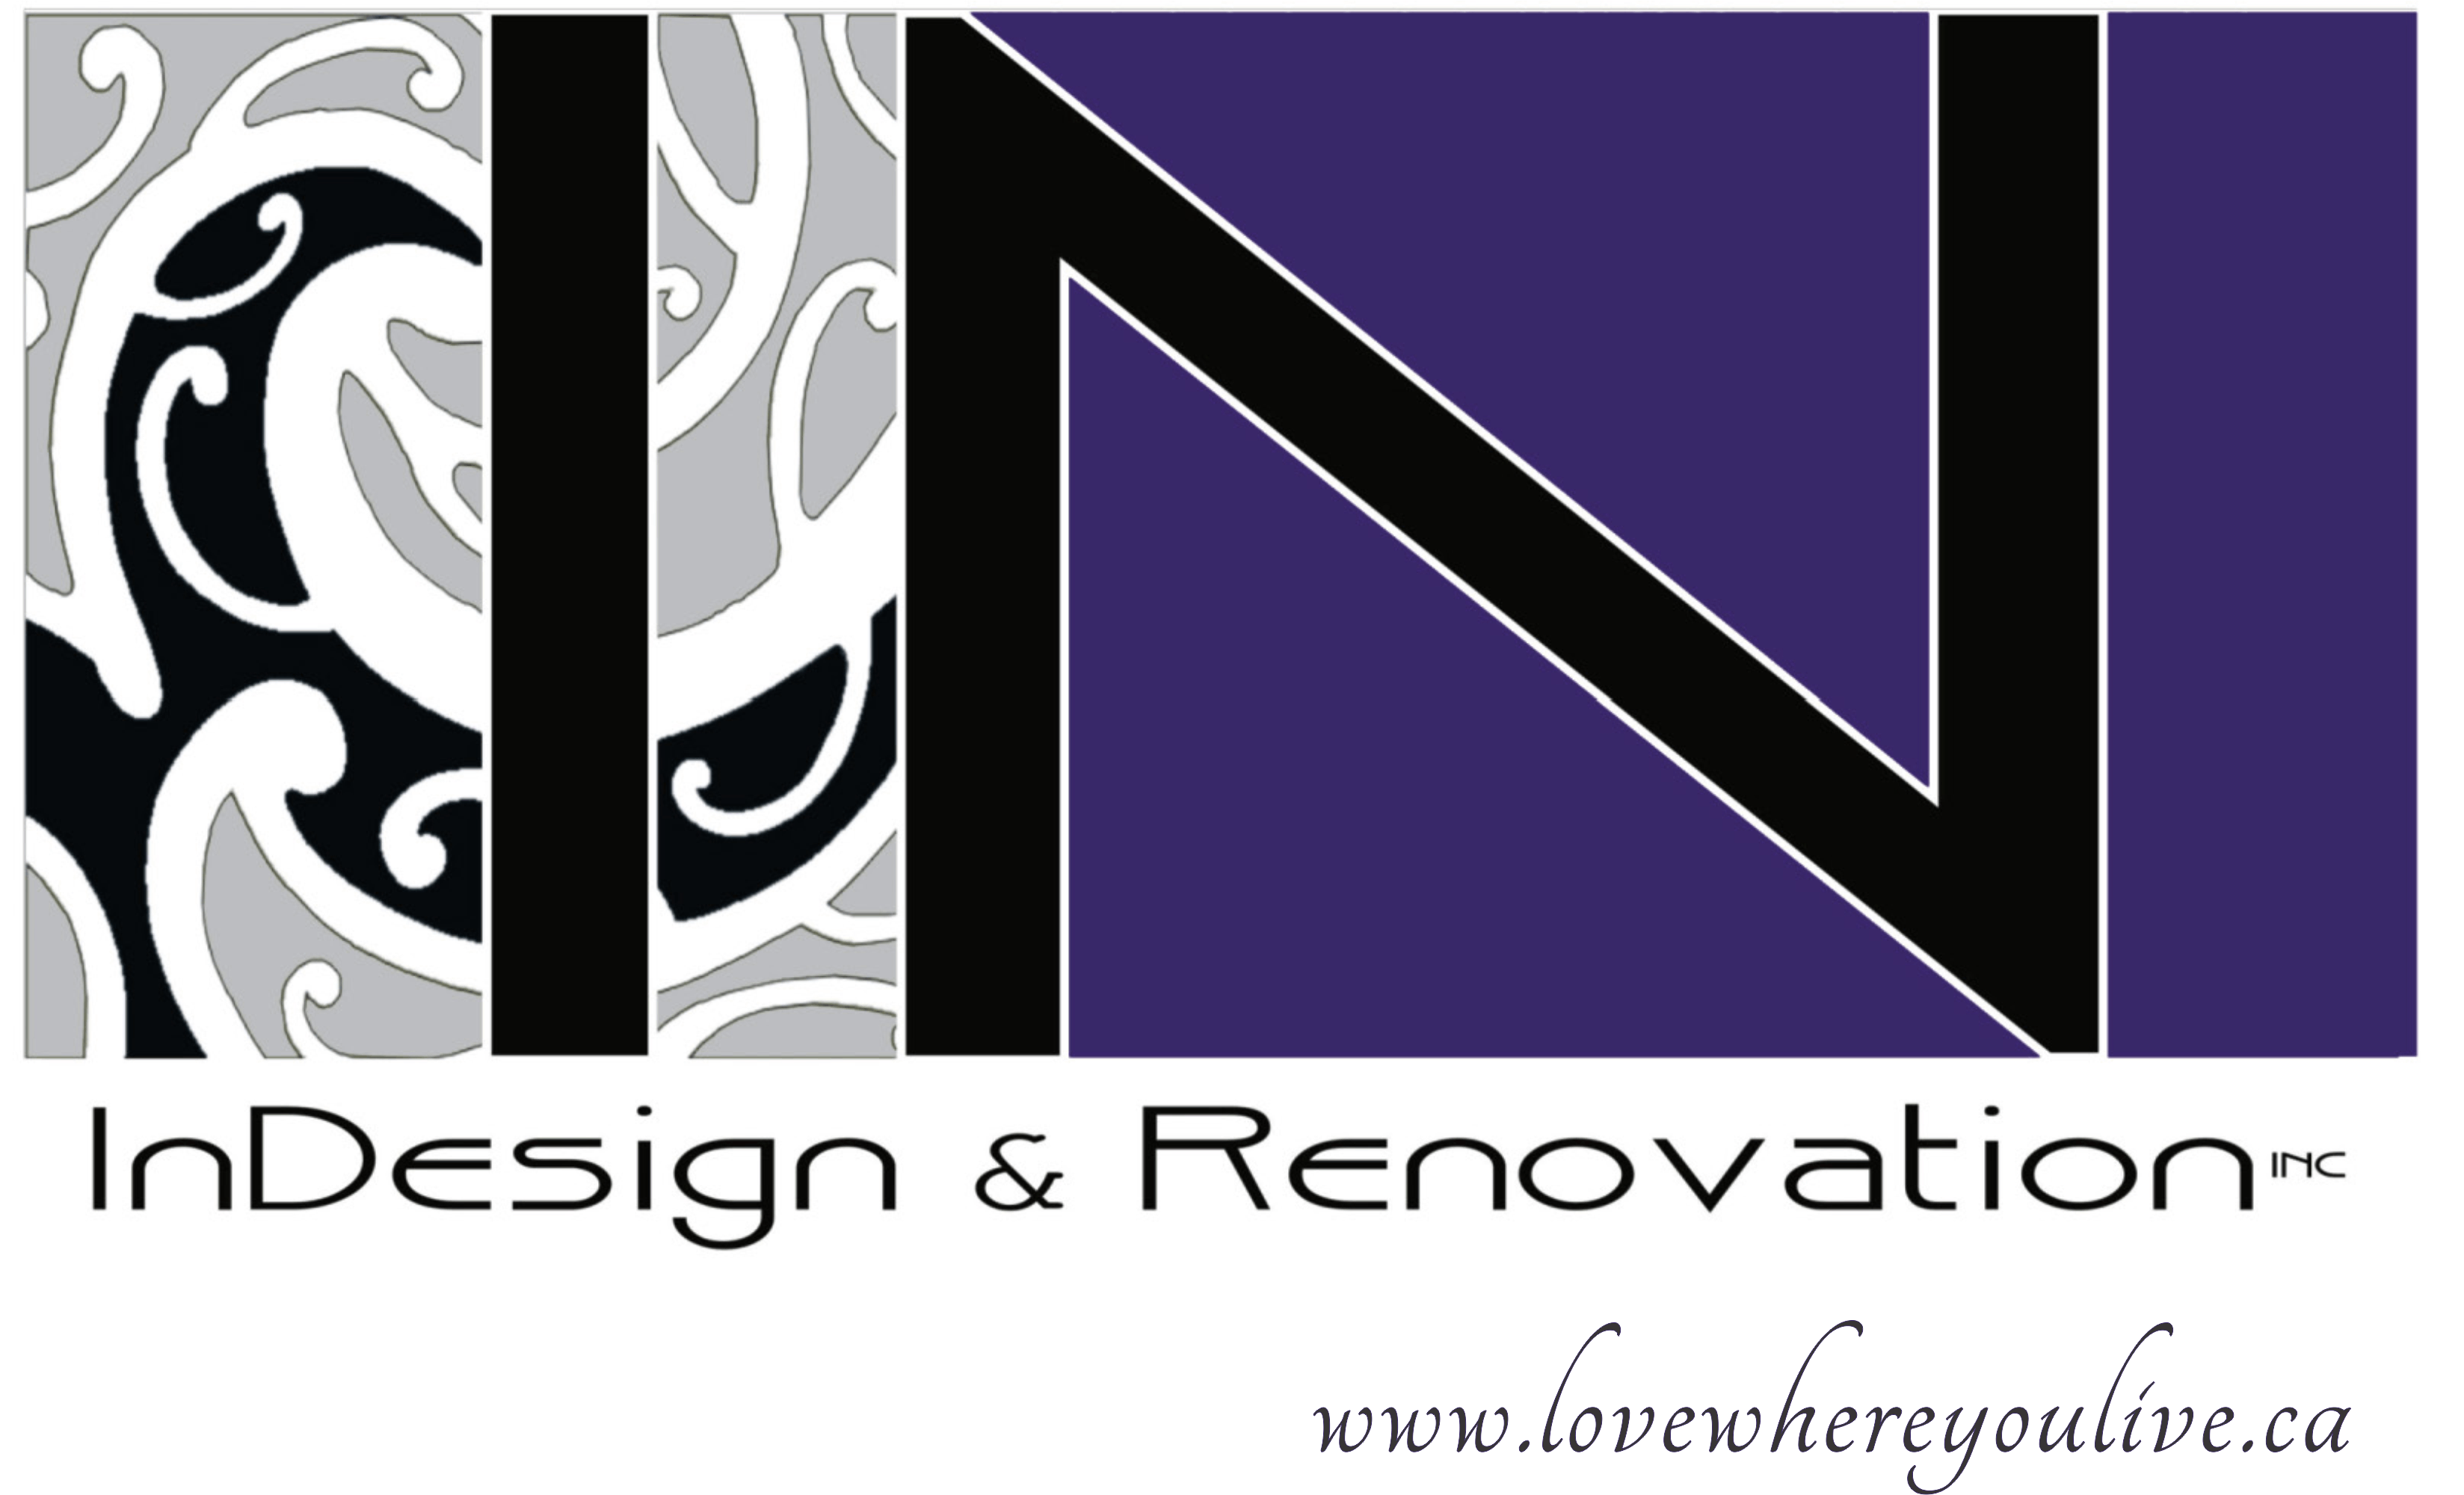 InDesign & Renovation Inc. Logo